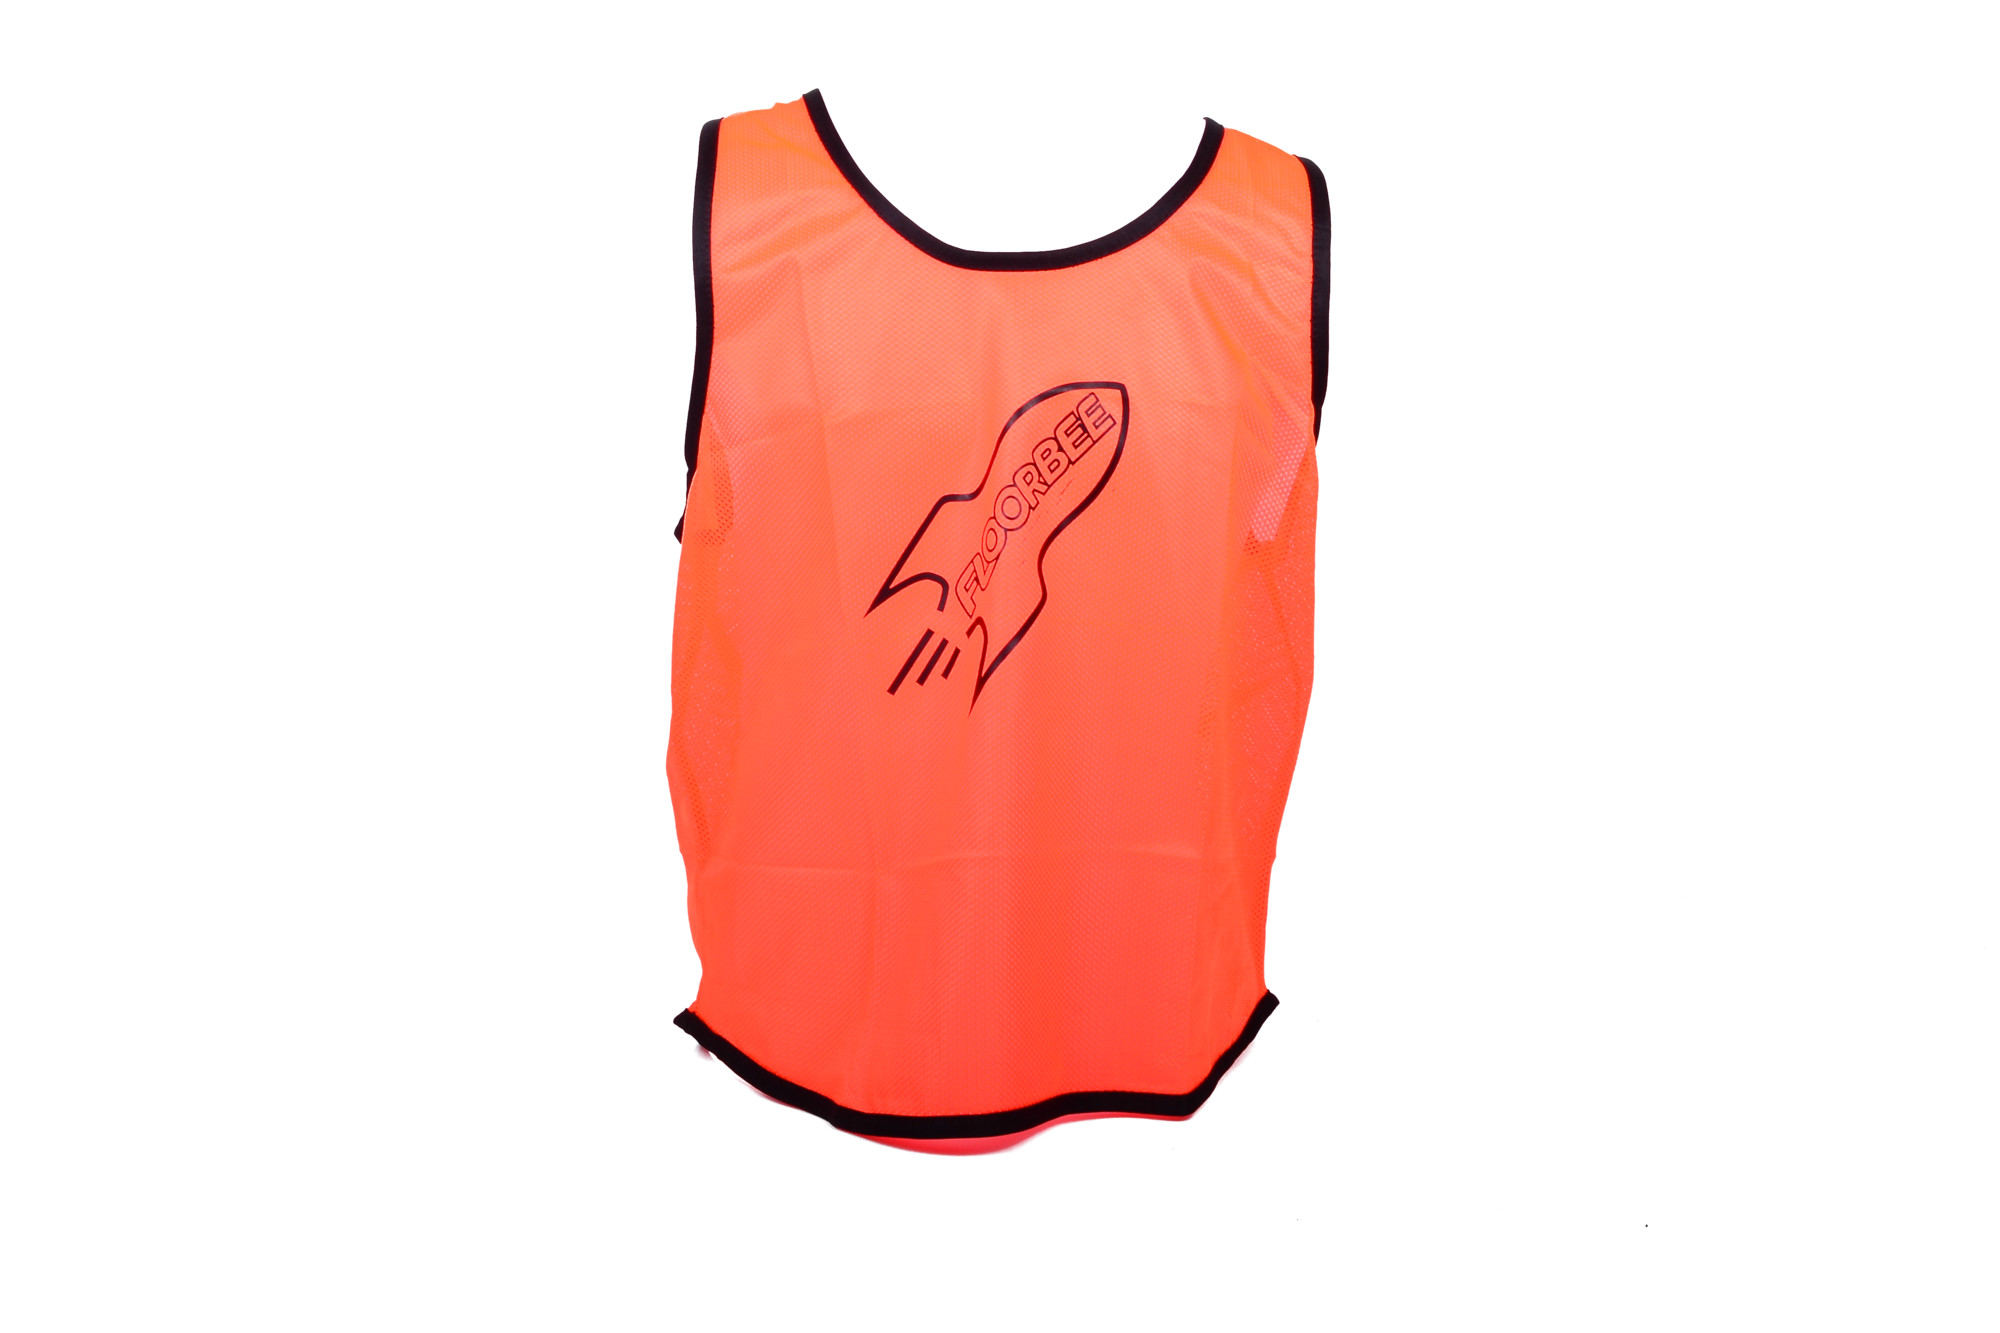 FLOORBEE Air vest 1.0 1 ks, Senior, neonově oranžová